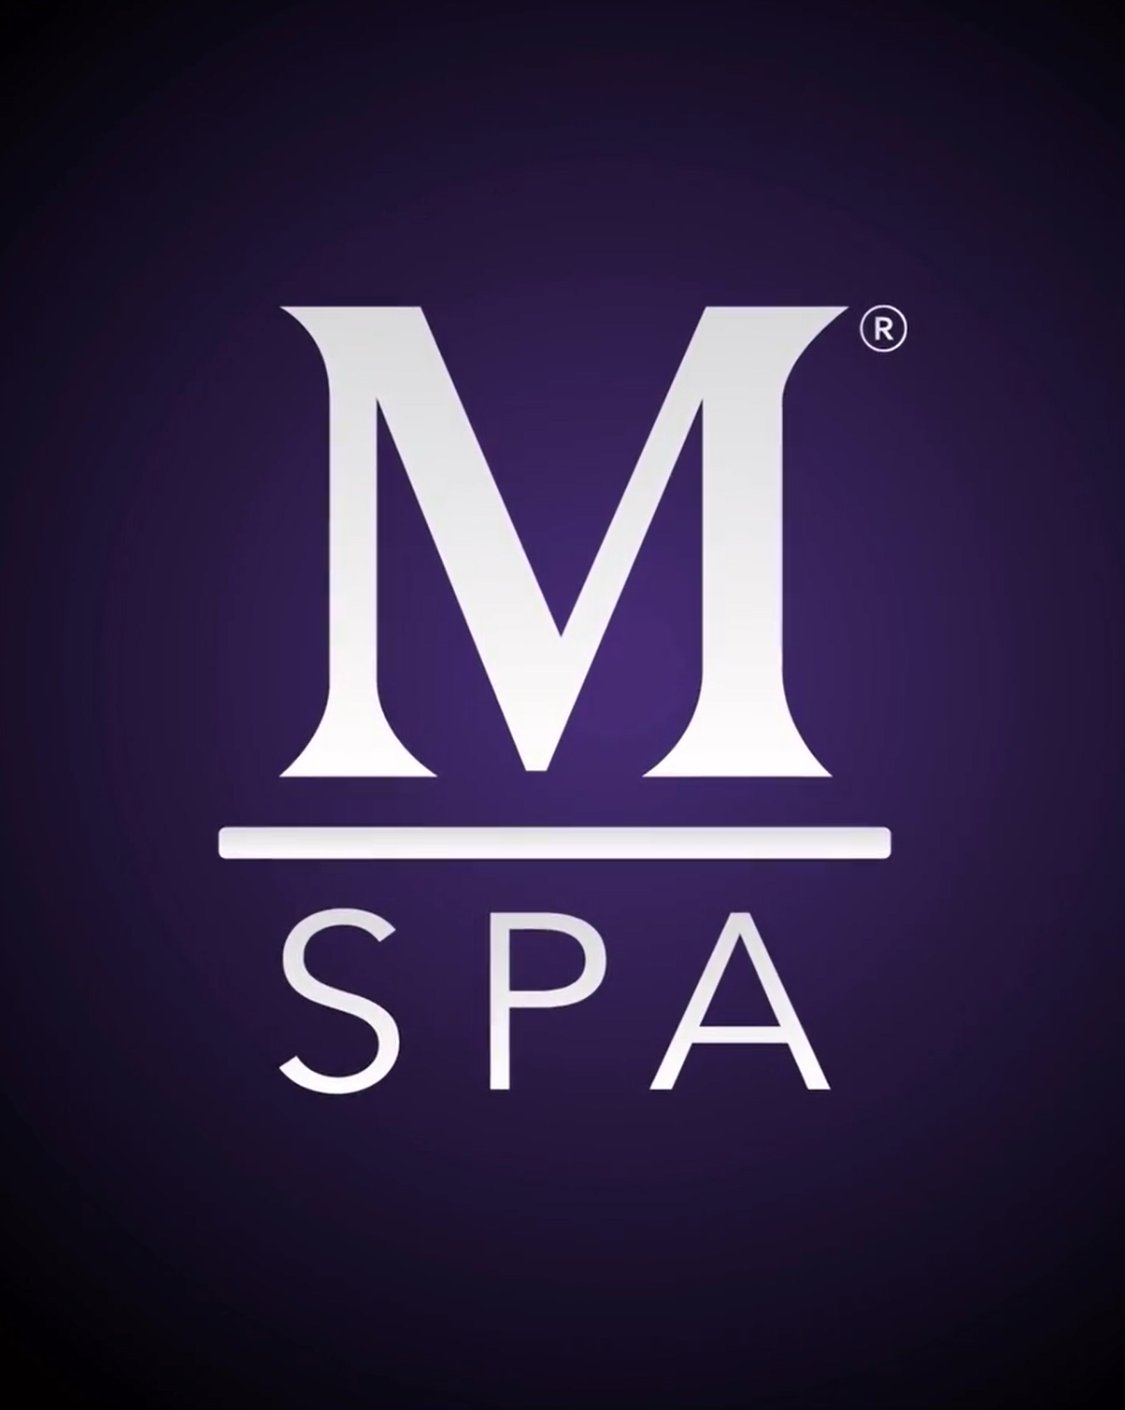 M Spa Logo on black and purple background